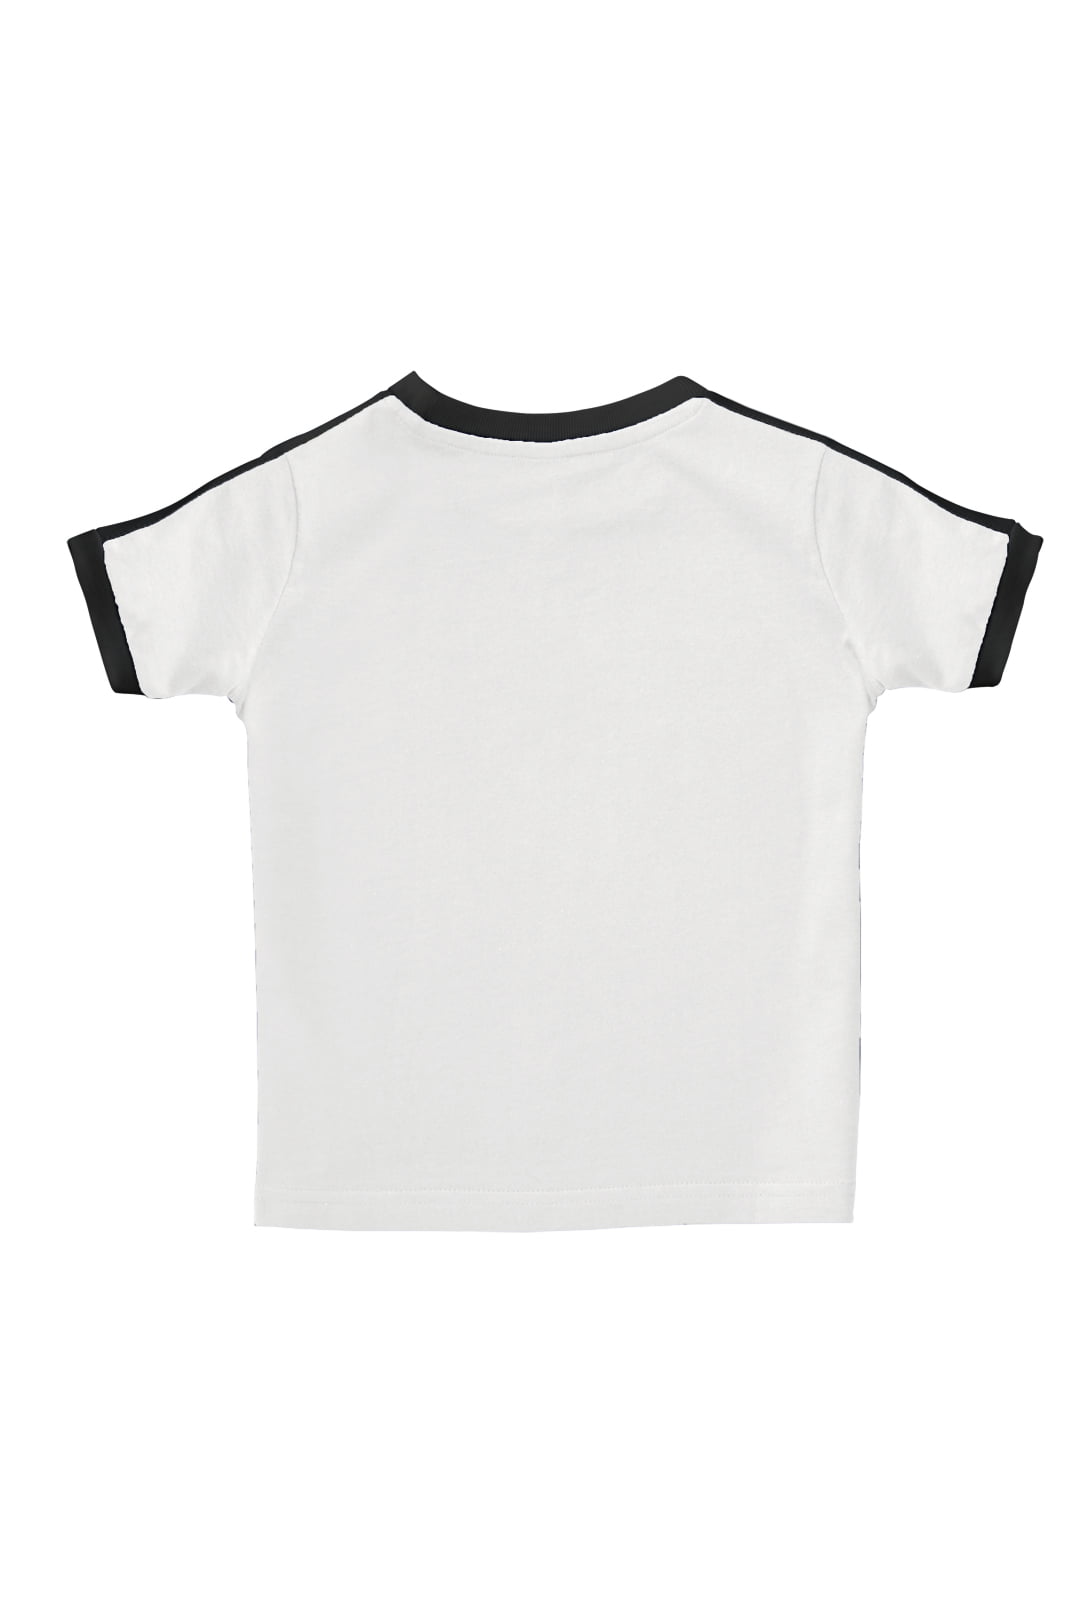 Mens The Who Retro Black and White  Mod 100% Cotton Shirts… 